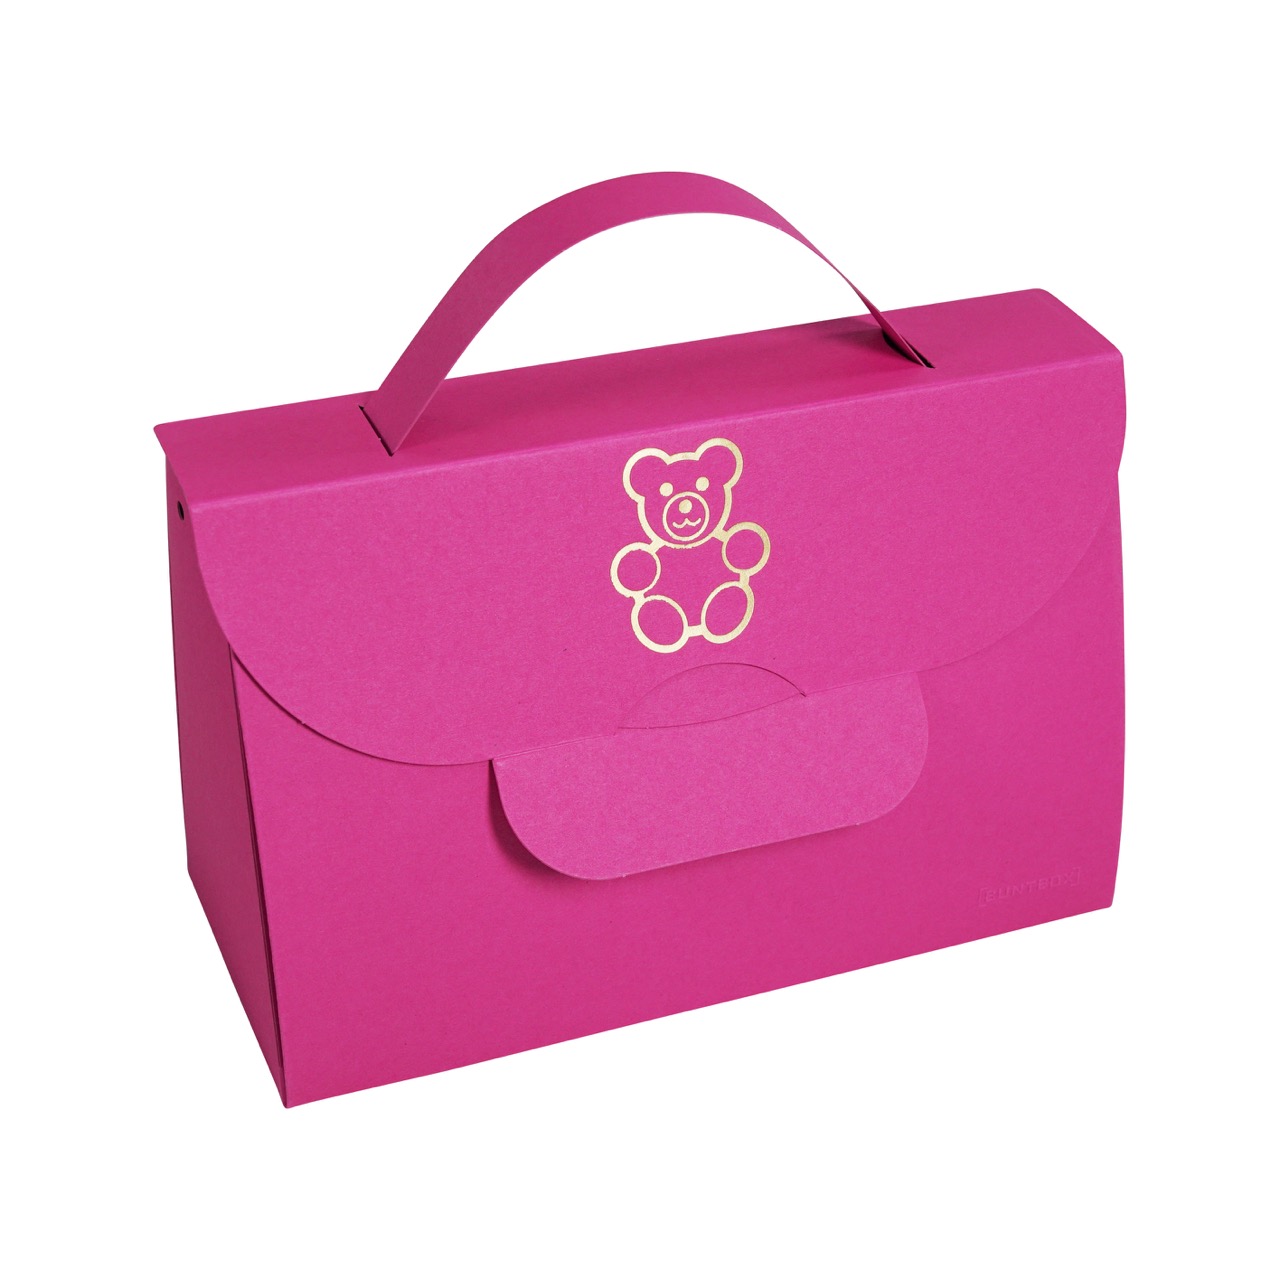 Buntbox Handbag XL Goldener Teddy in Magenta